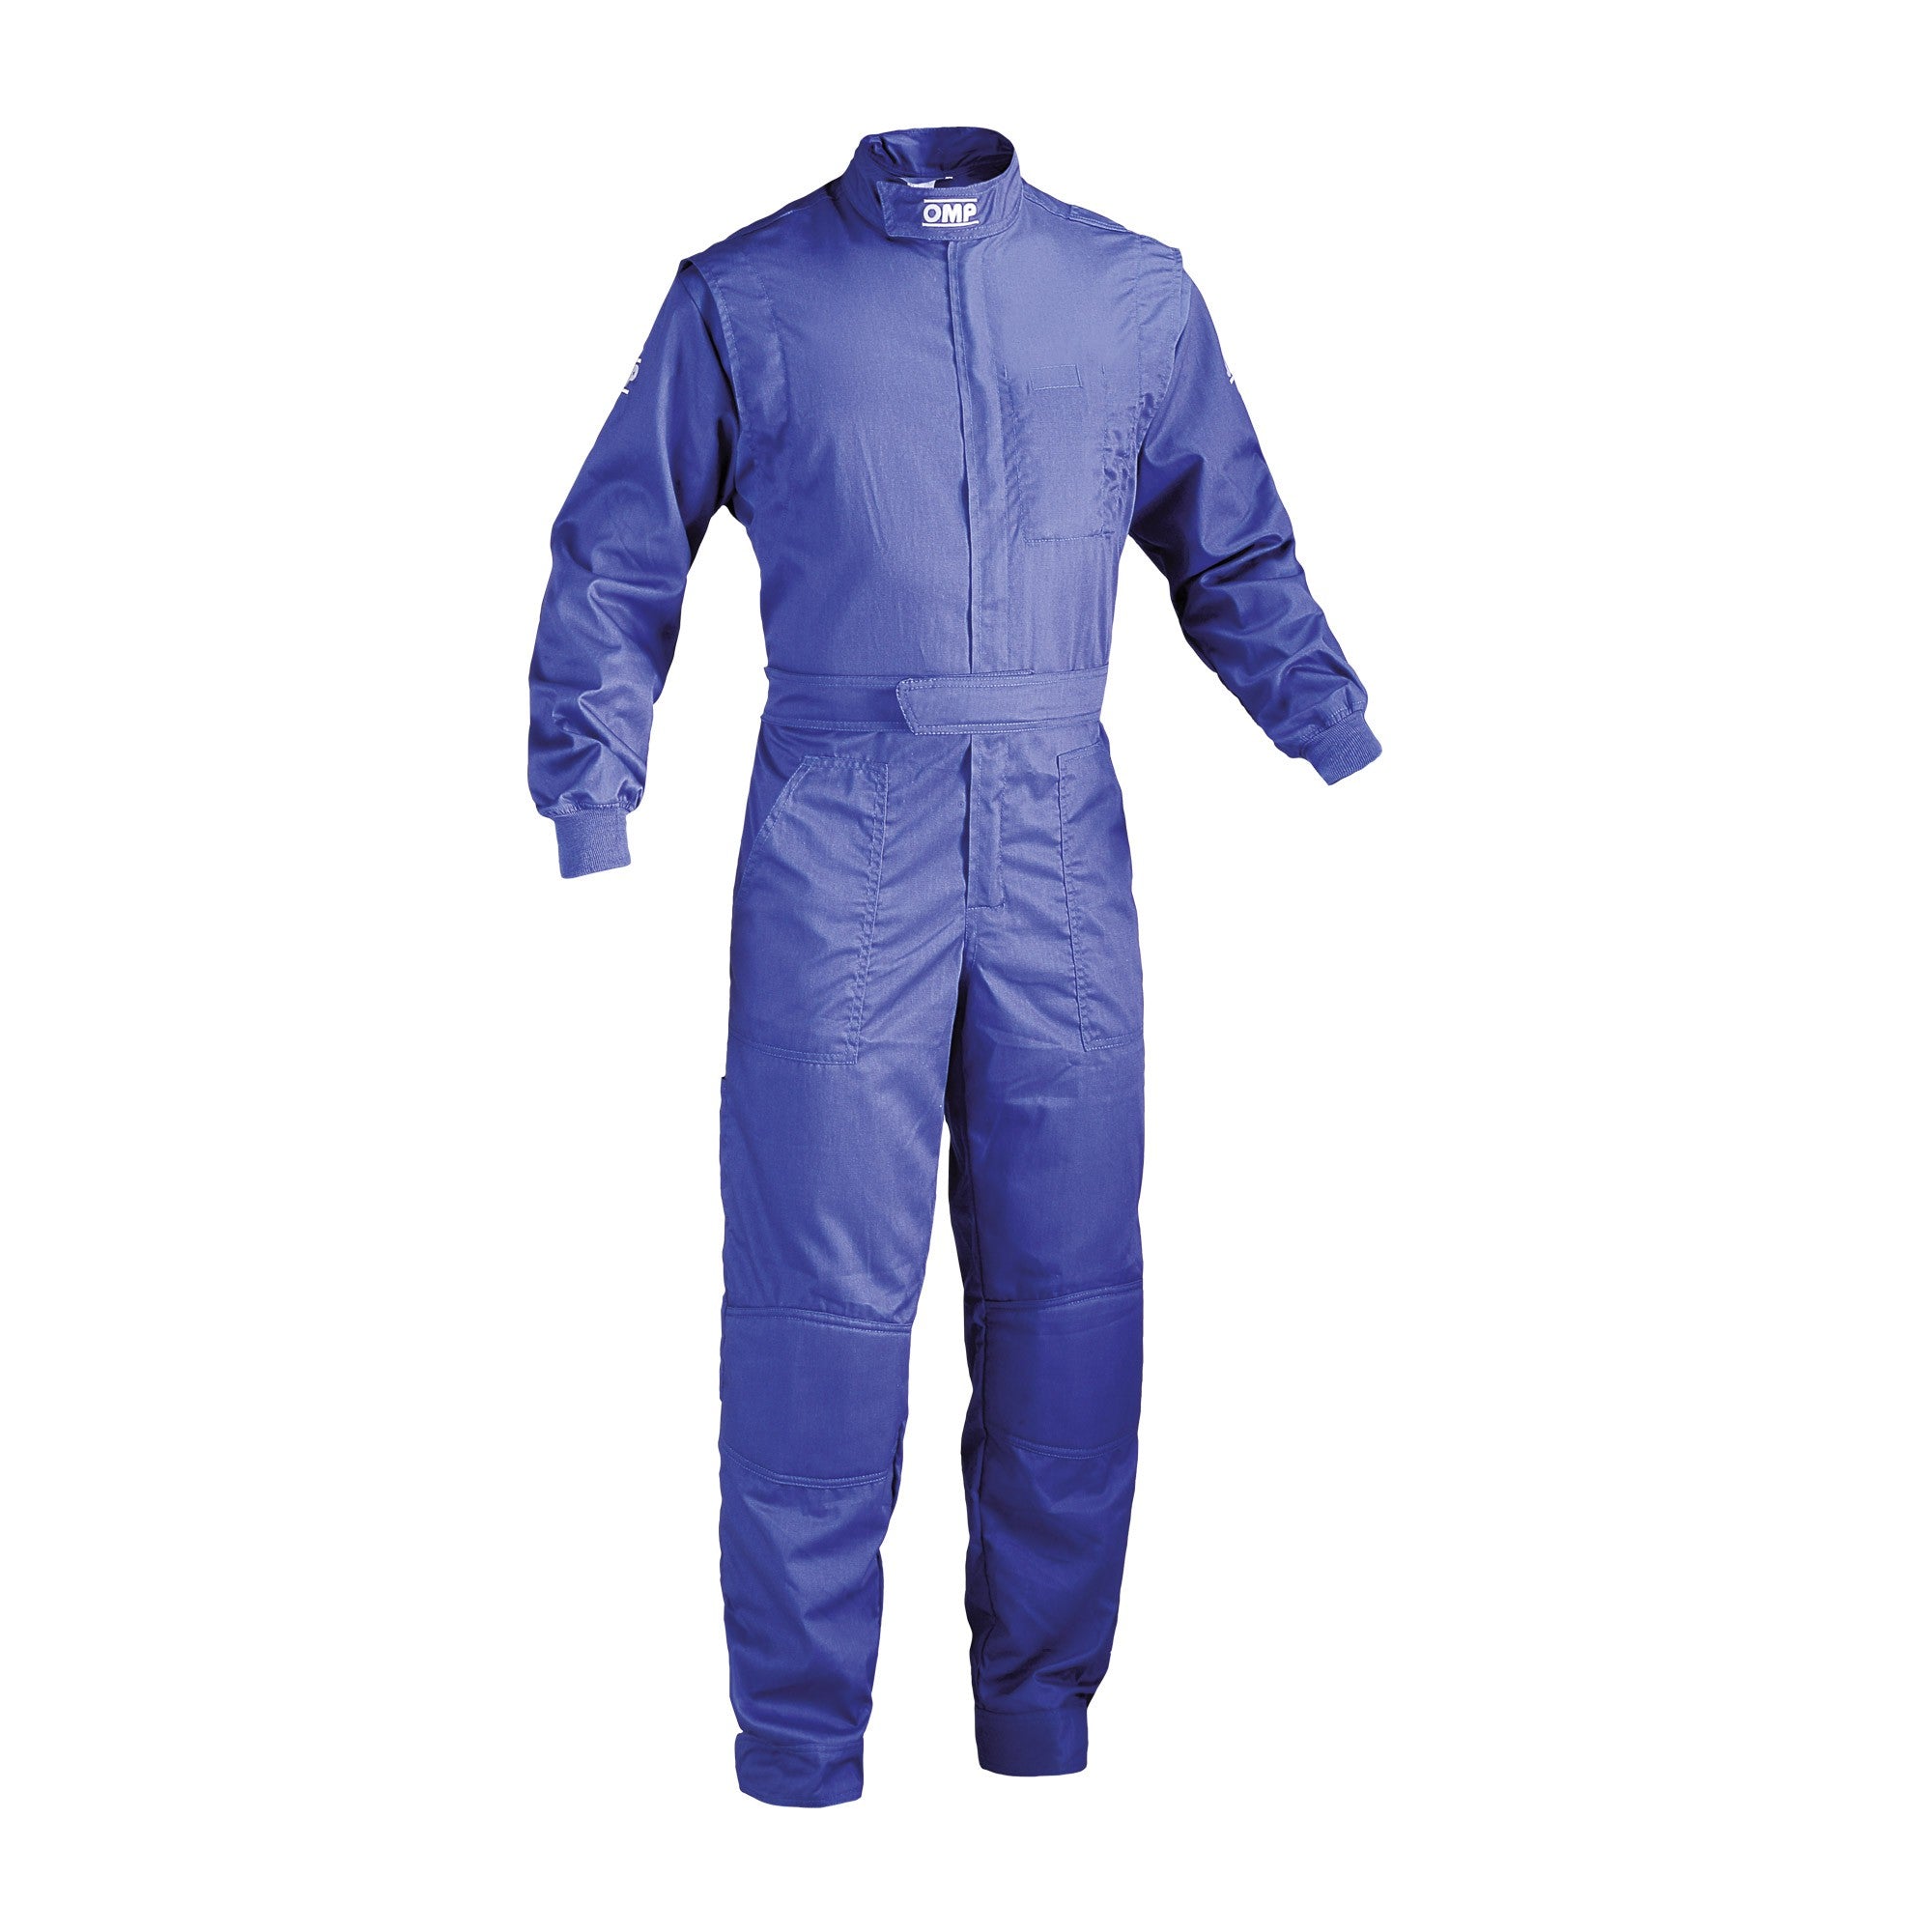 OMP NB0-1579-AK1-041-120 (NB1579041120) Mechanic suit SUMMER, kid blue, size 120 Photo-0 